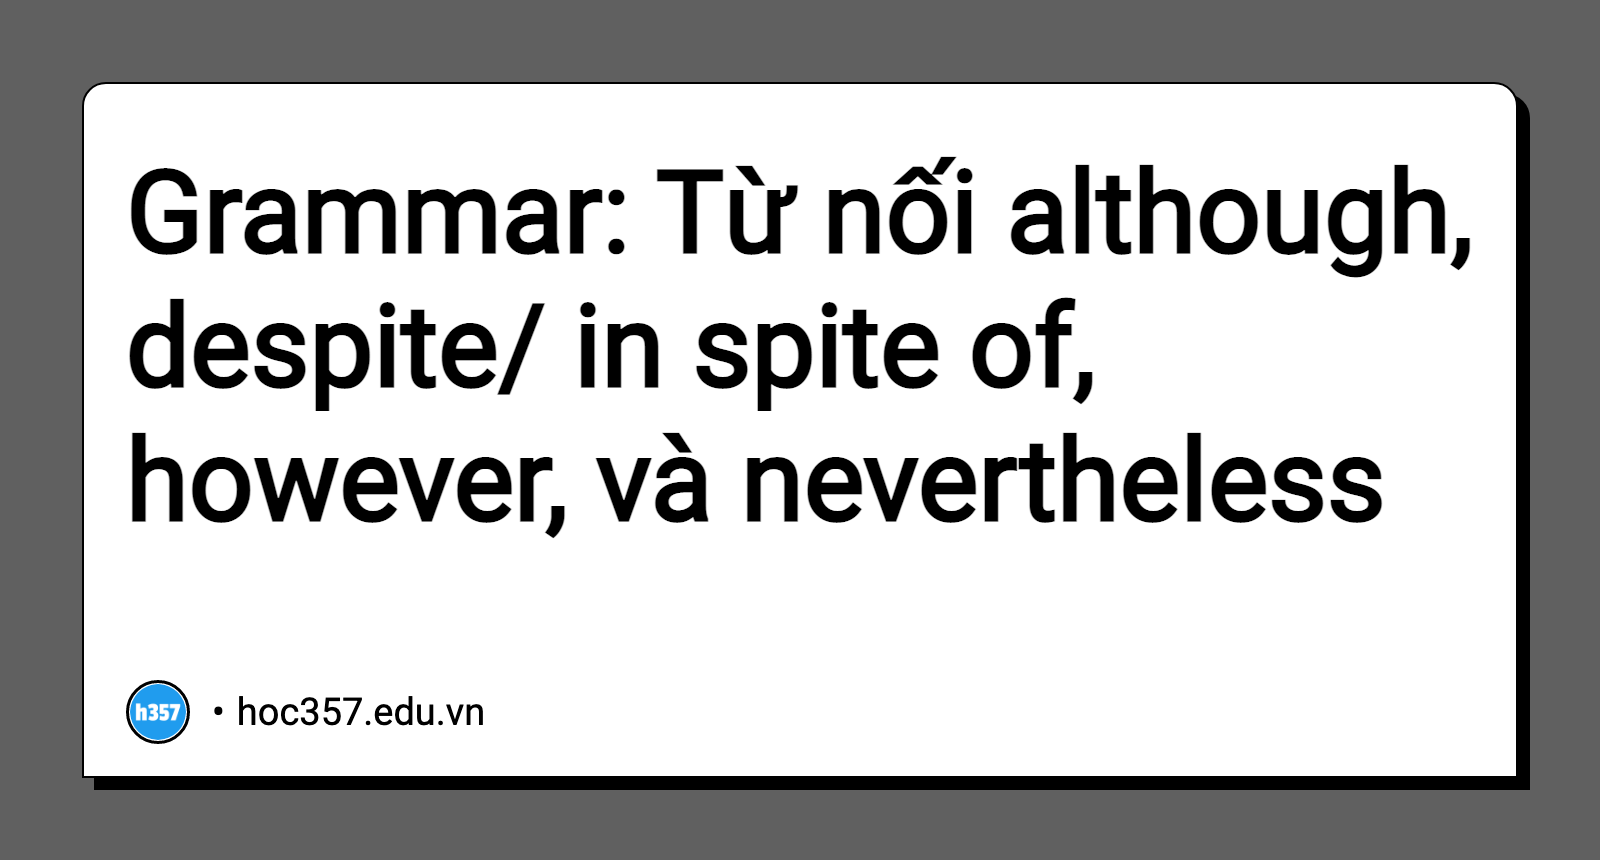 Hình minh họa Grammar: Từ nối although, despite/ in spite of, however, và nevertheless